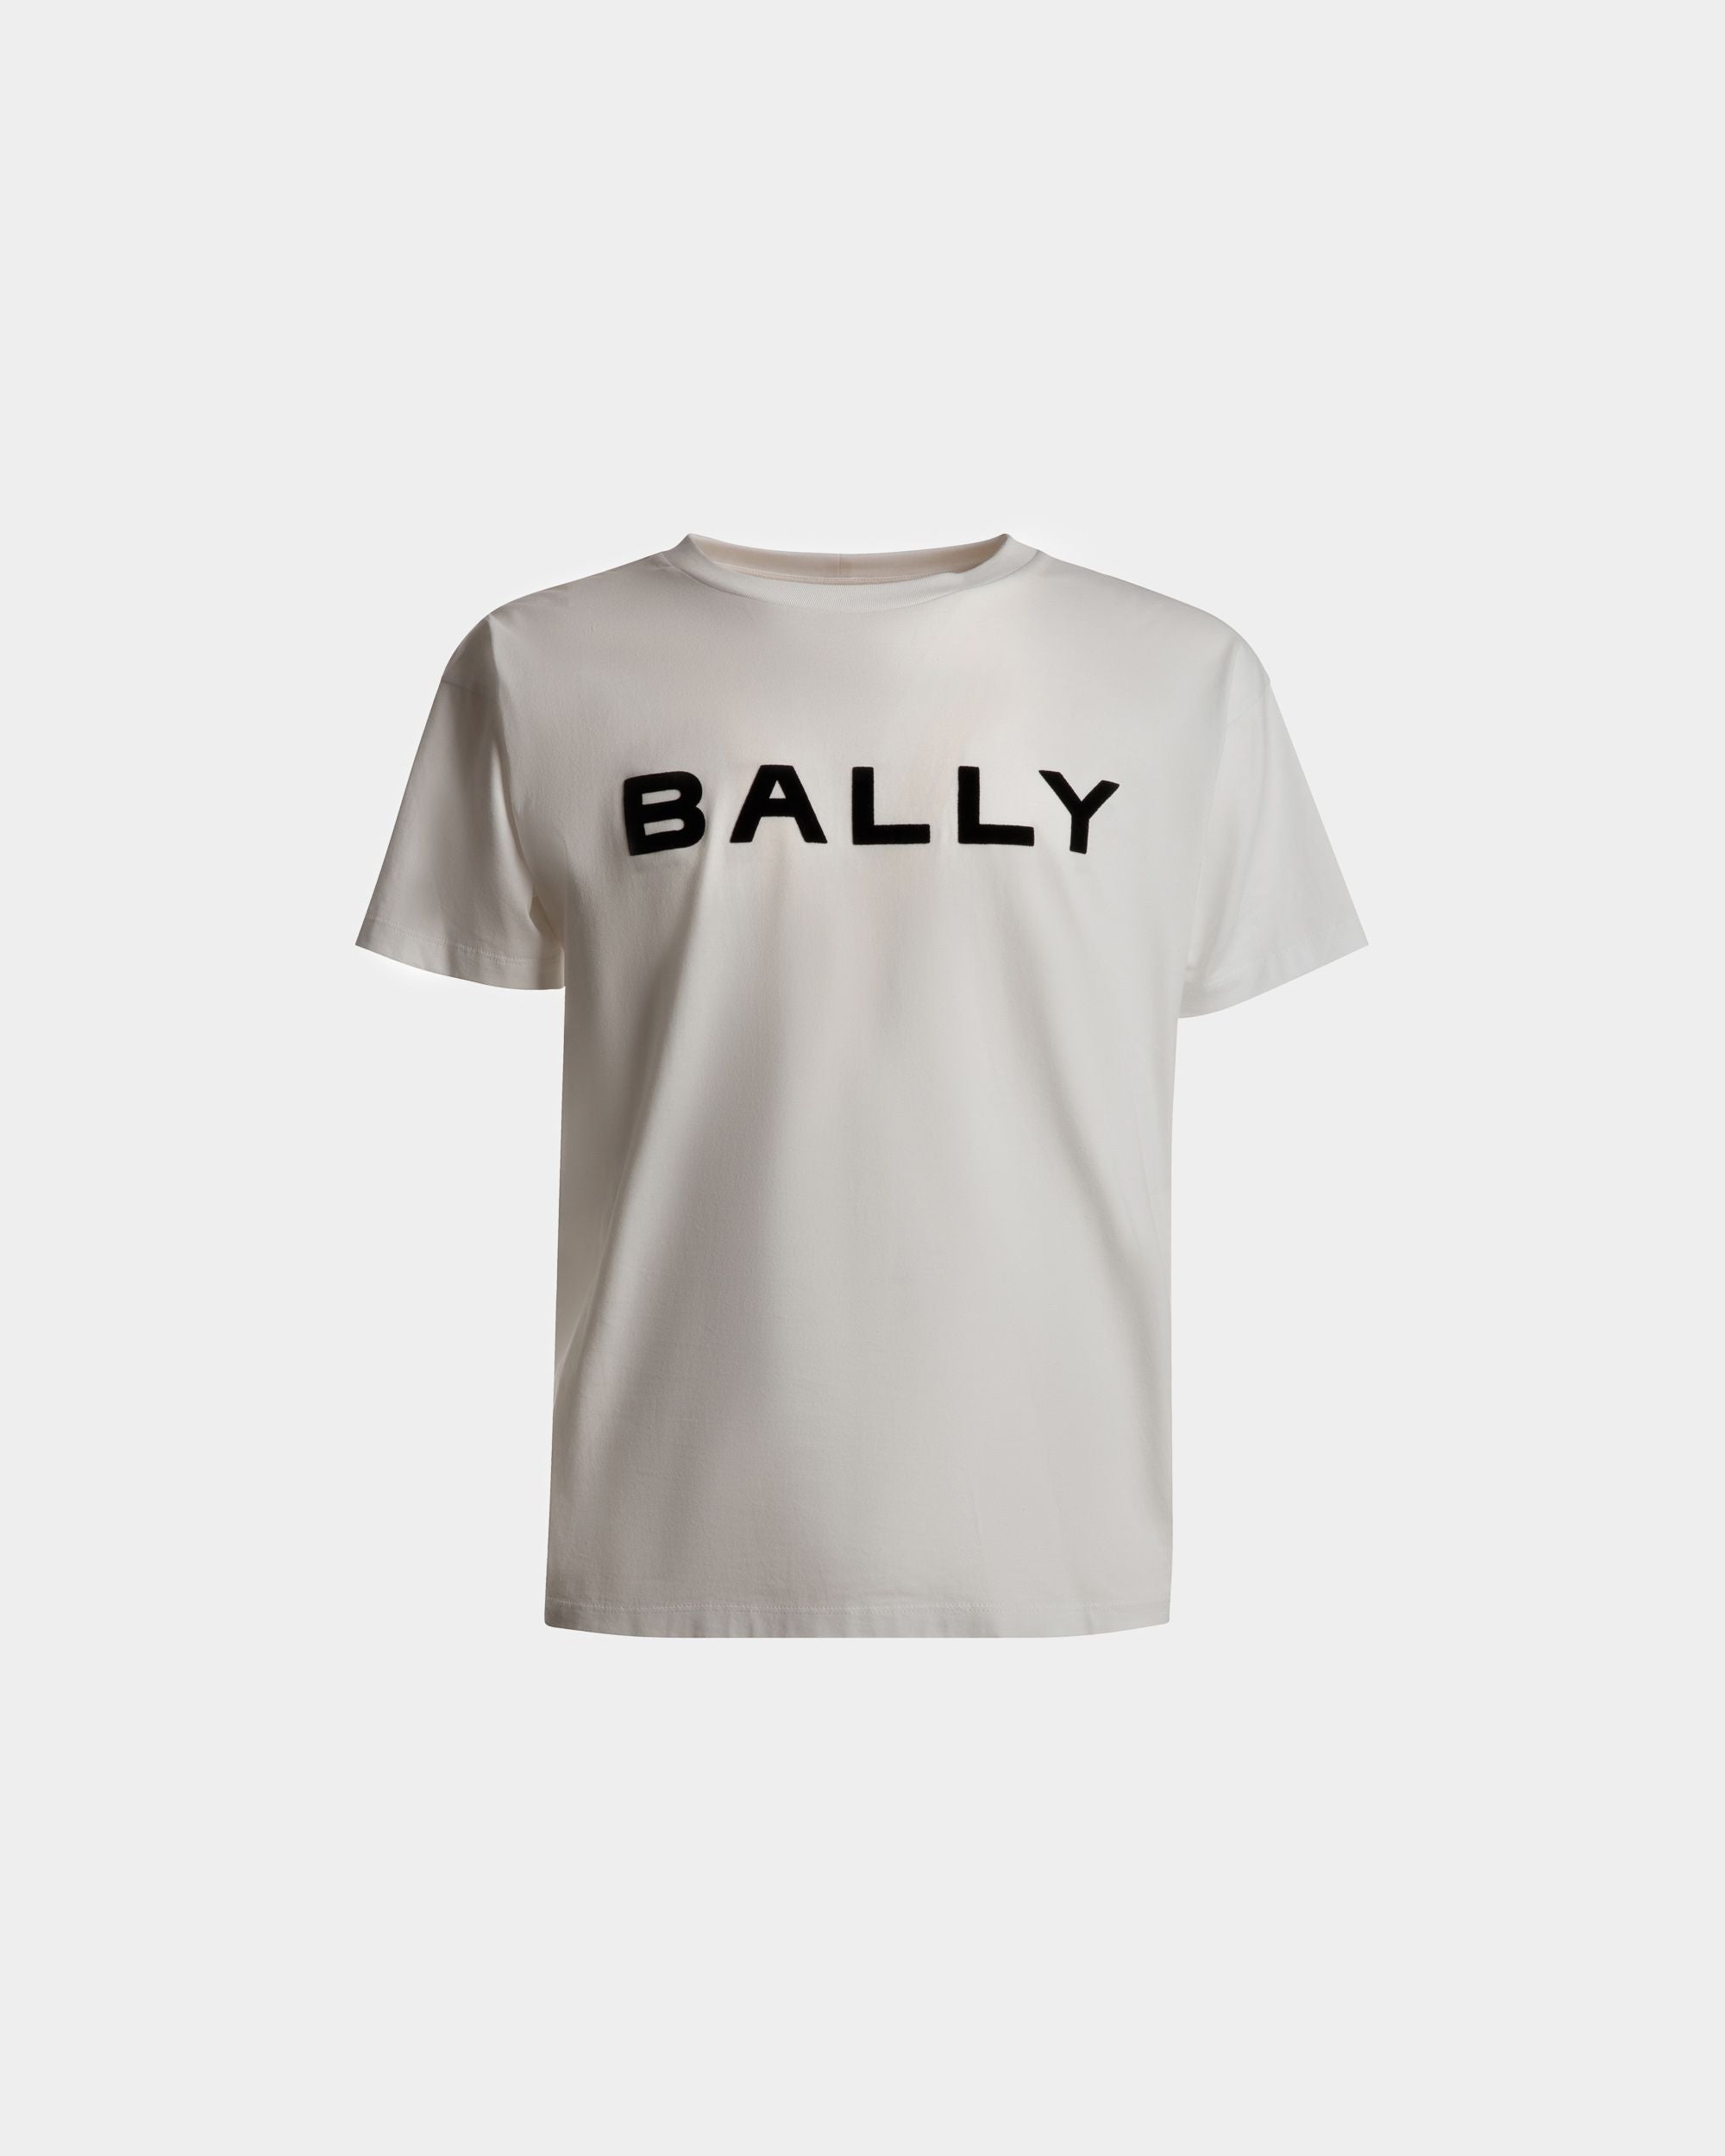 Logo T-Shirt | Men's T-Shirt | White Cotton | Bally | Still Life Front